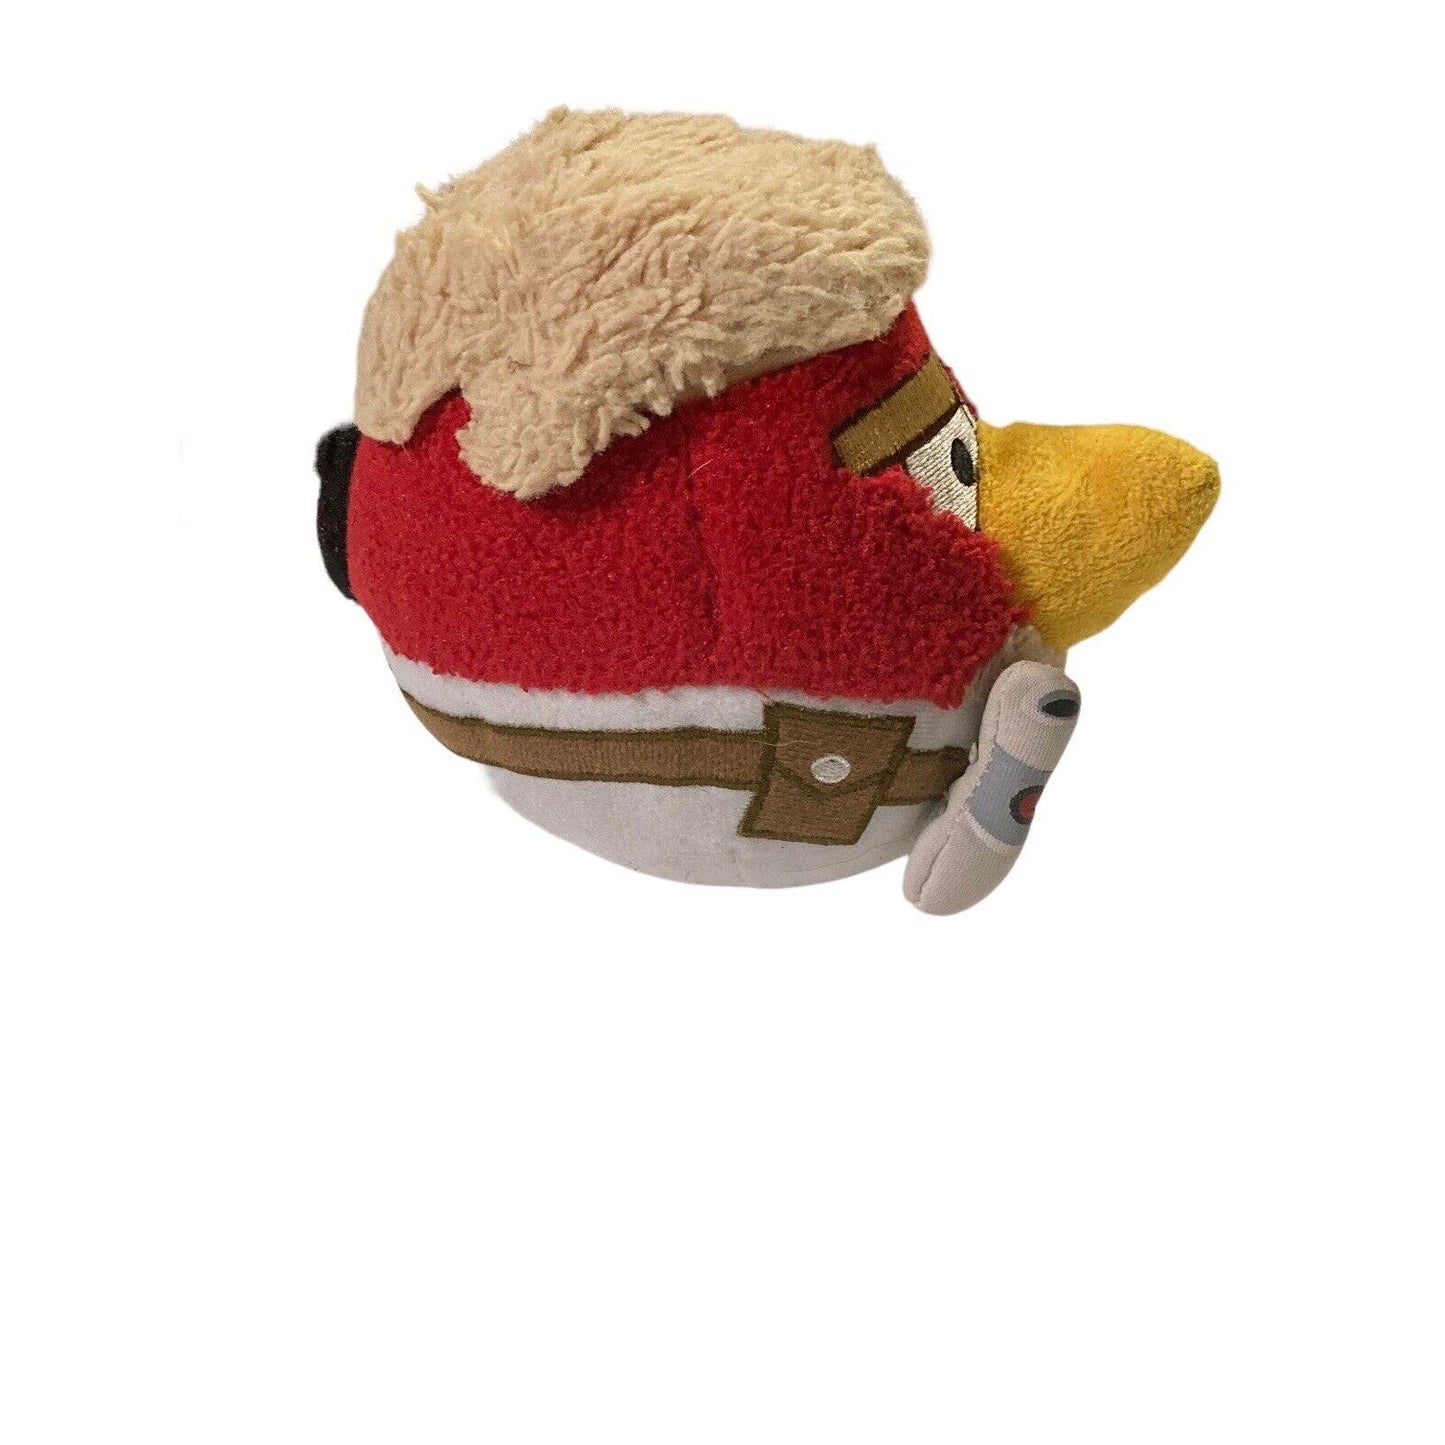 Angry Birds - Star Wars Luke Skywalker Large 9” Plush Stuffed Animal Red 2012